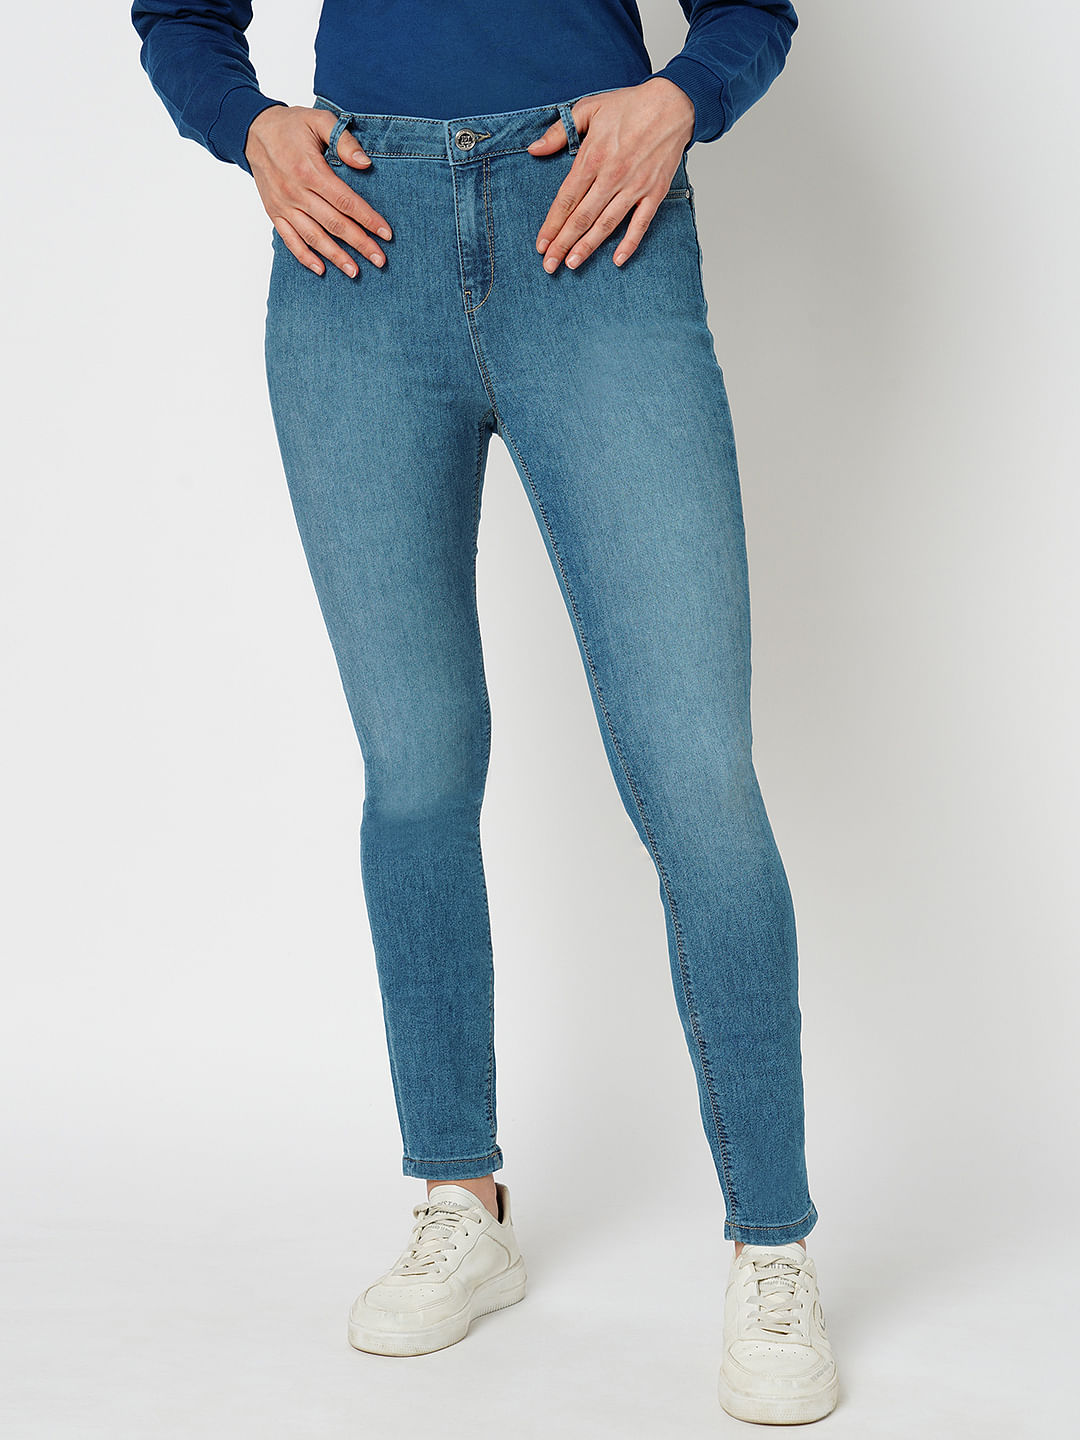 wax jean Women's Butt I Love You Basic Five Pocket Push-Up Skinny Denim  Jeans, Light, 3 at Amazon Women's Jeans store